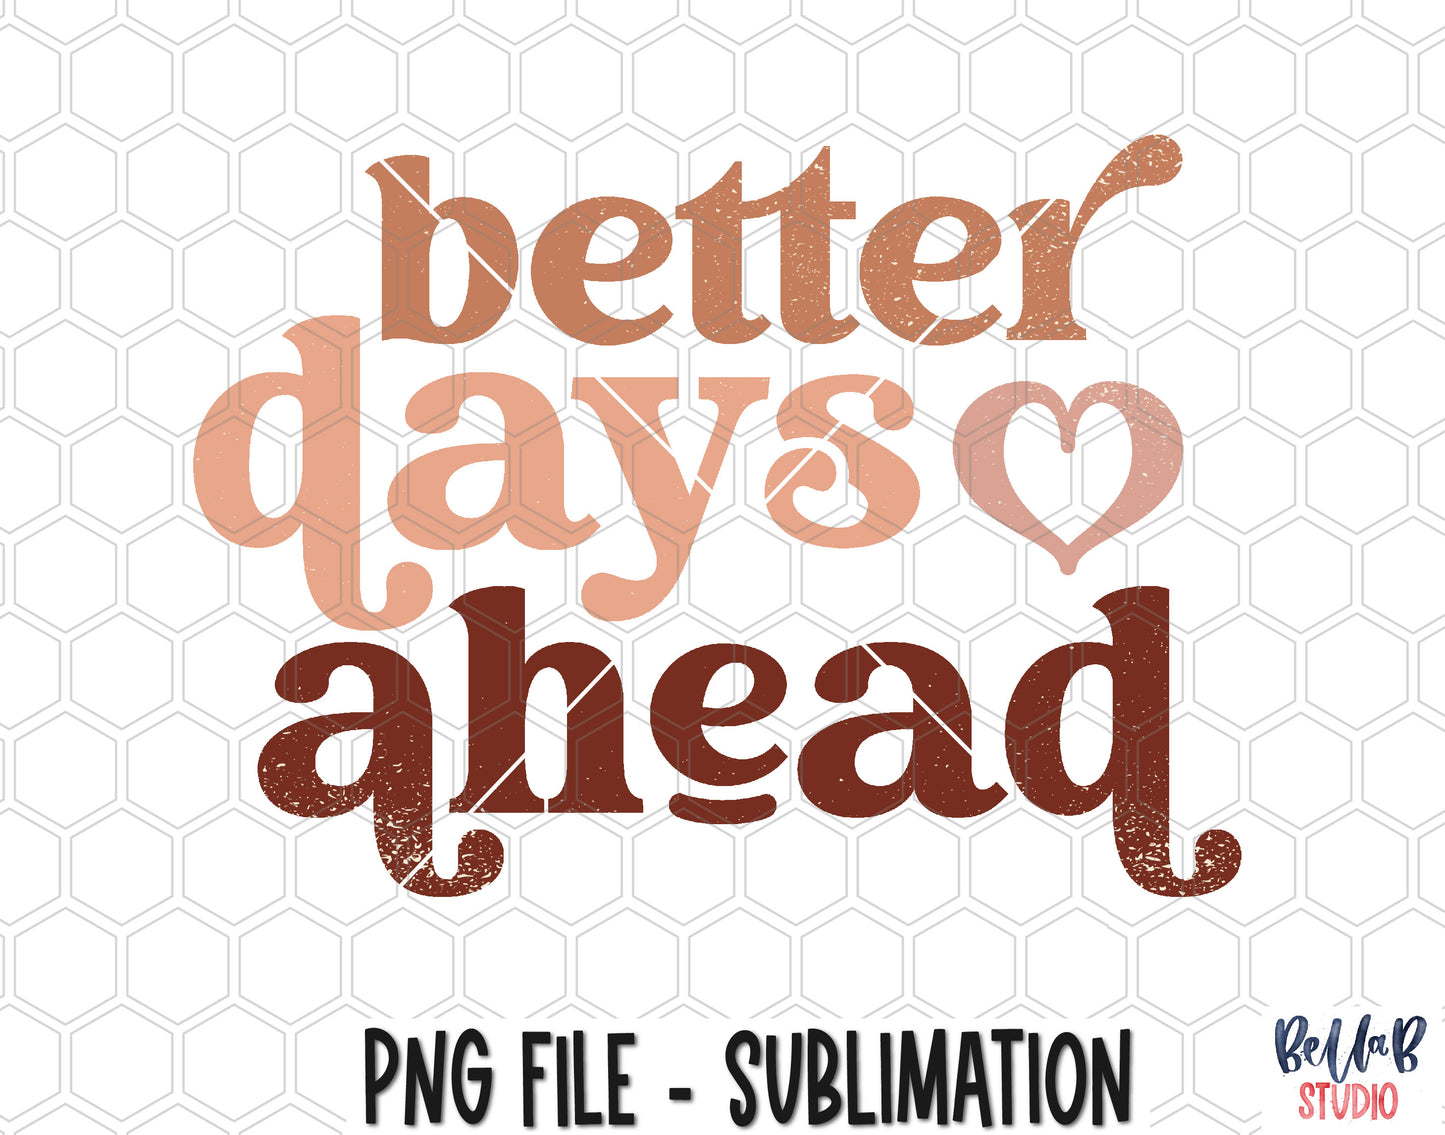 Better Days Ahead Sublimation Design